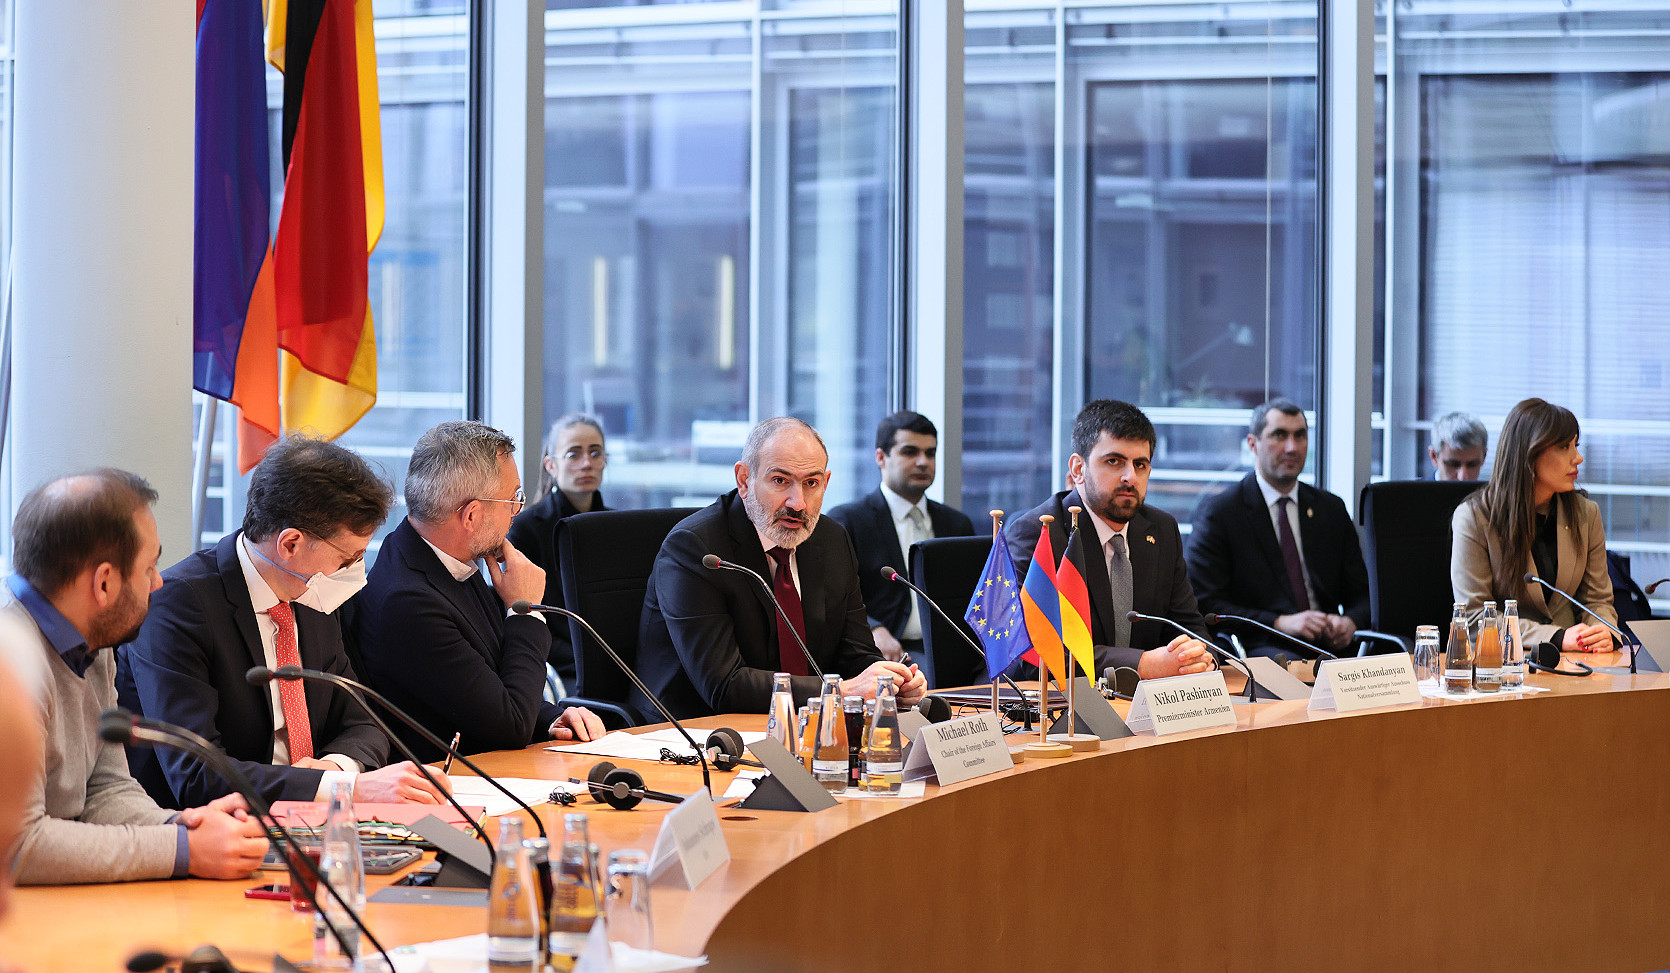 Prime Minister presents regional situation at Bundestag